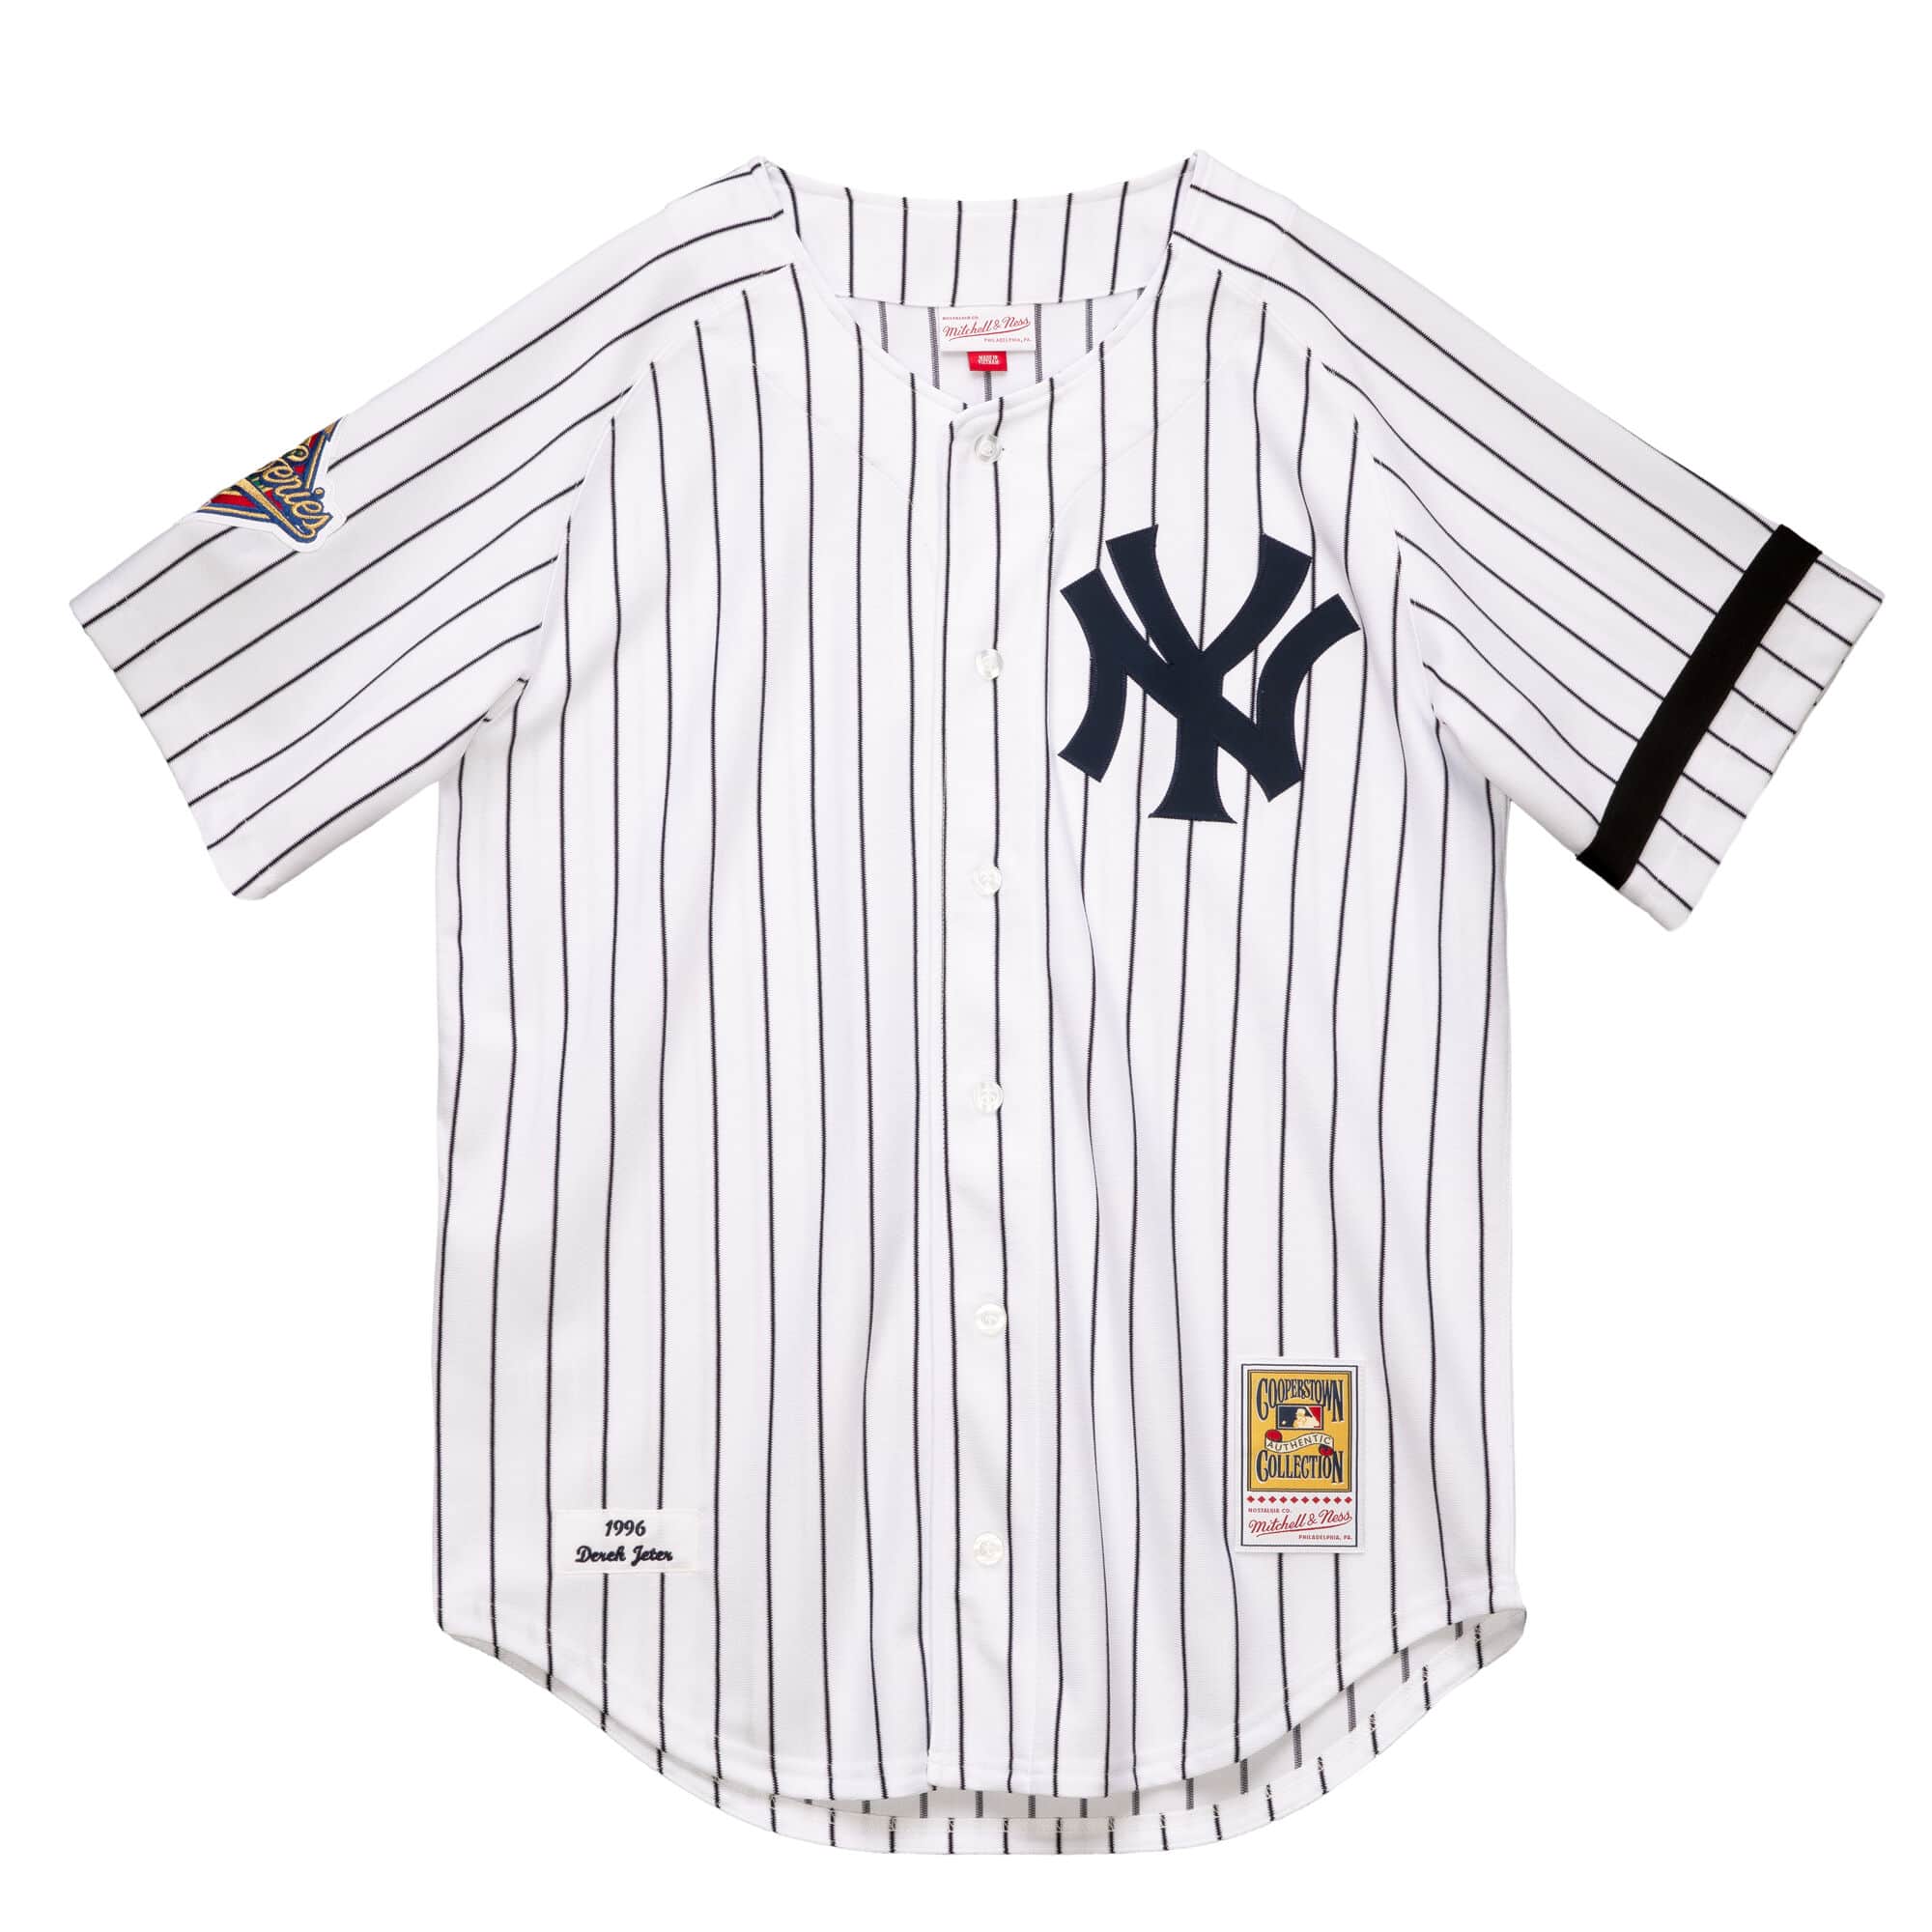 Derek Jeter Signed Authentic New York Yankees Pinstripe Jersey